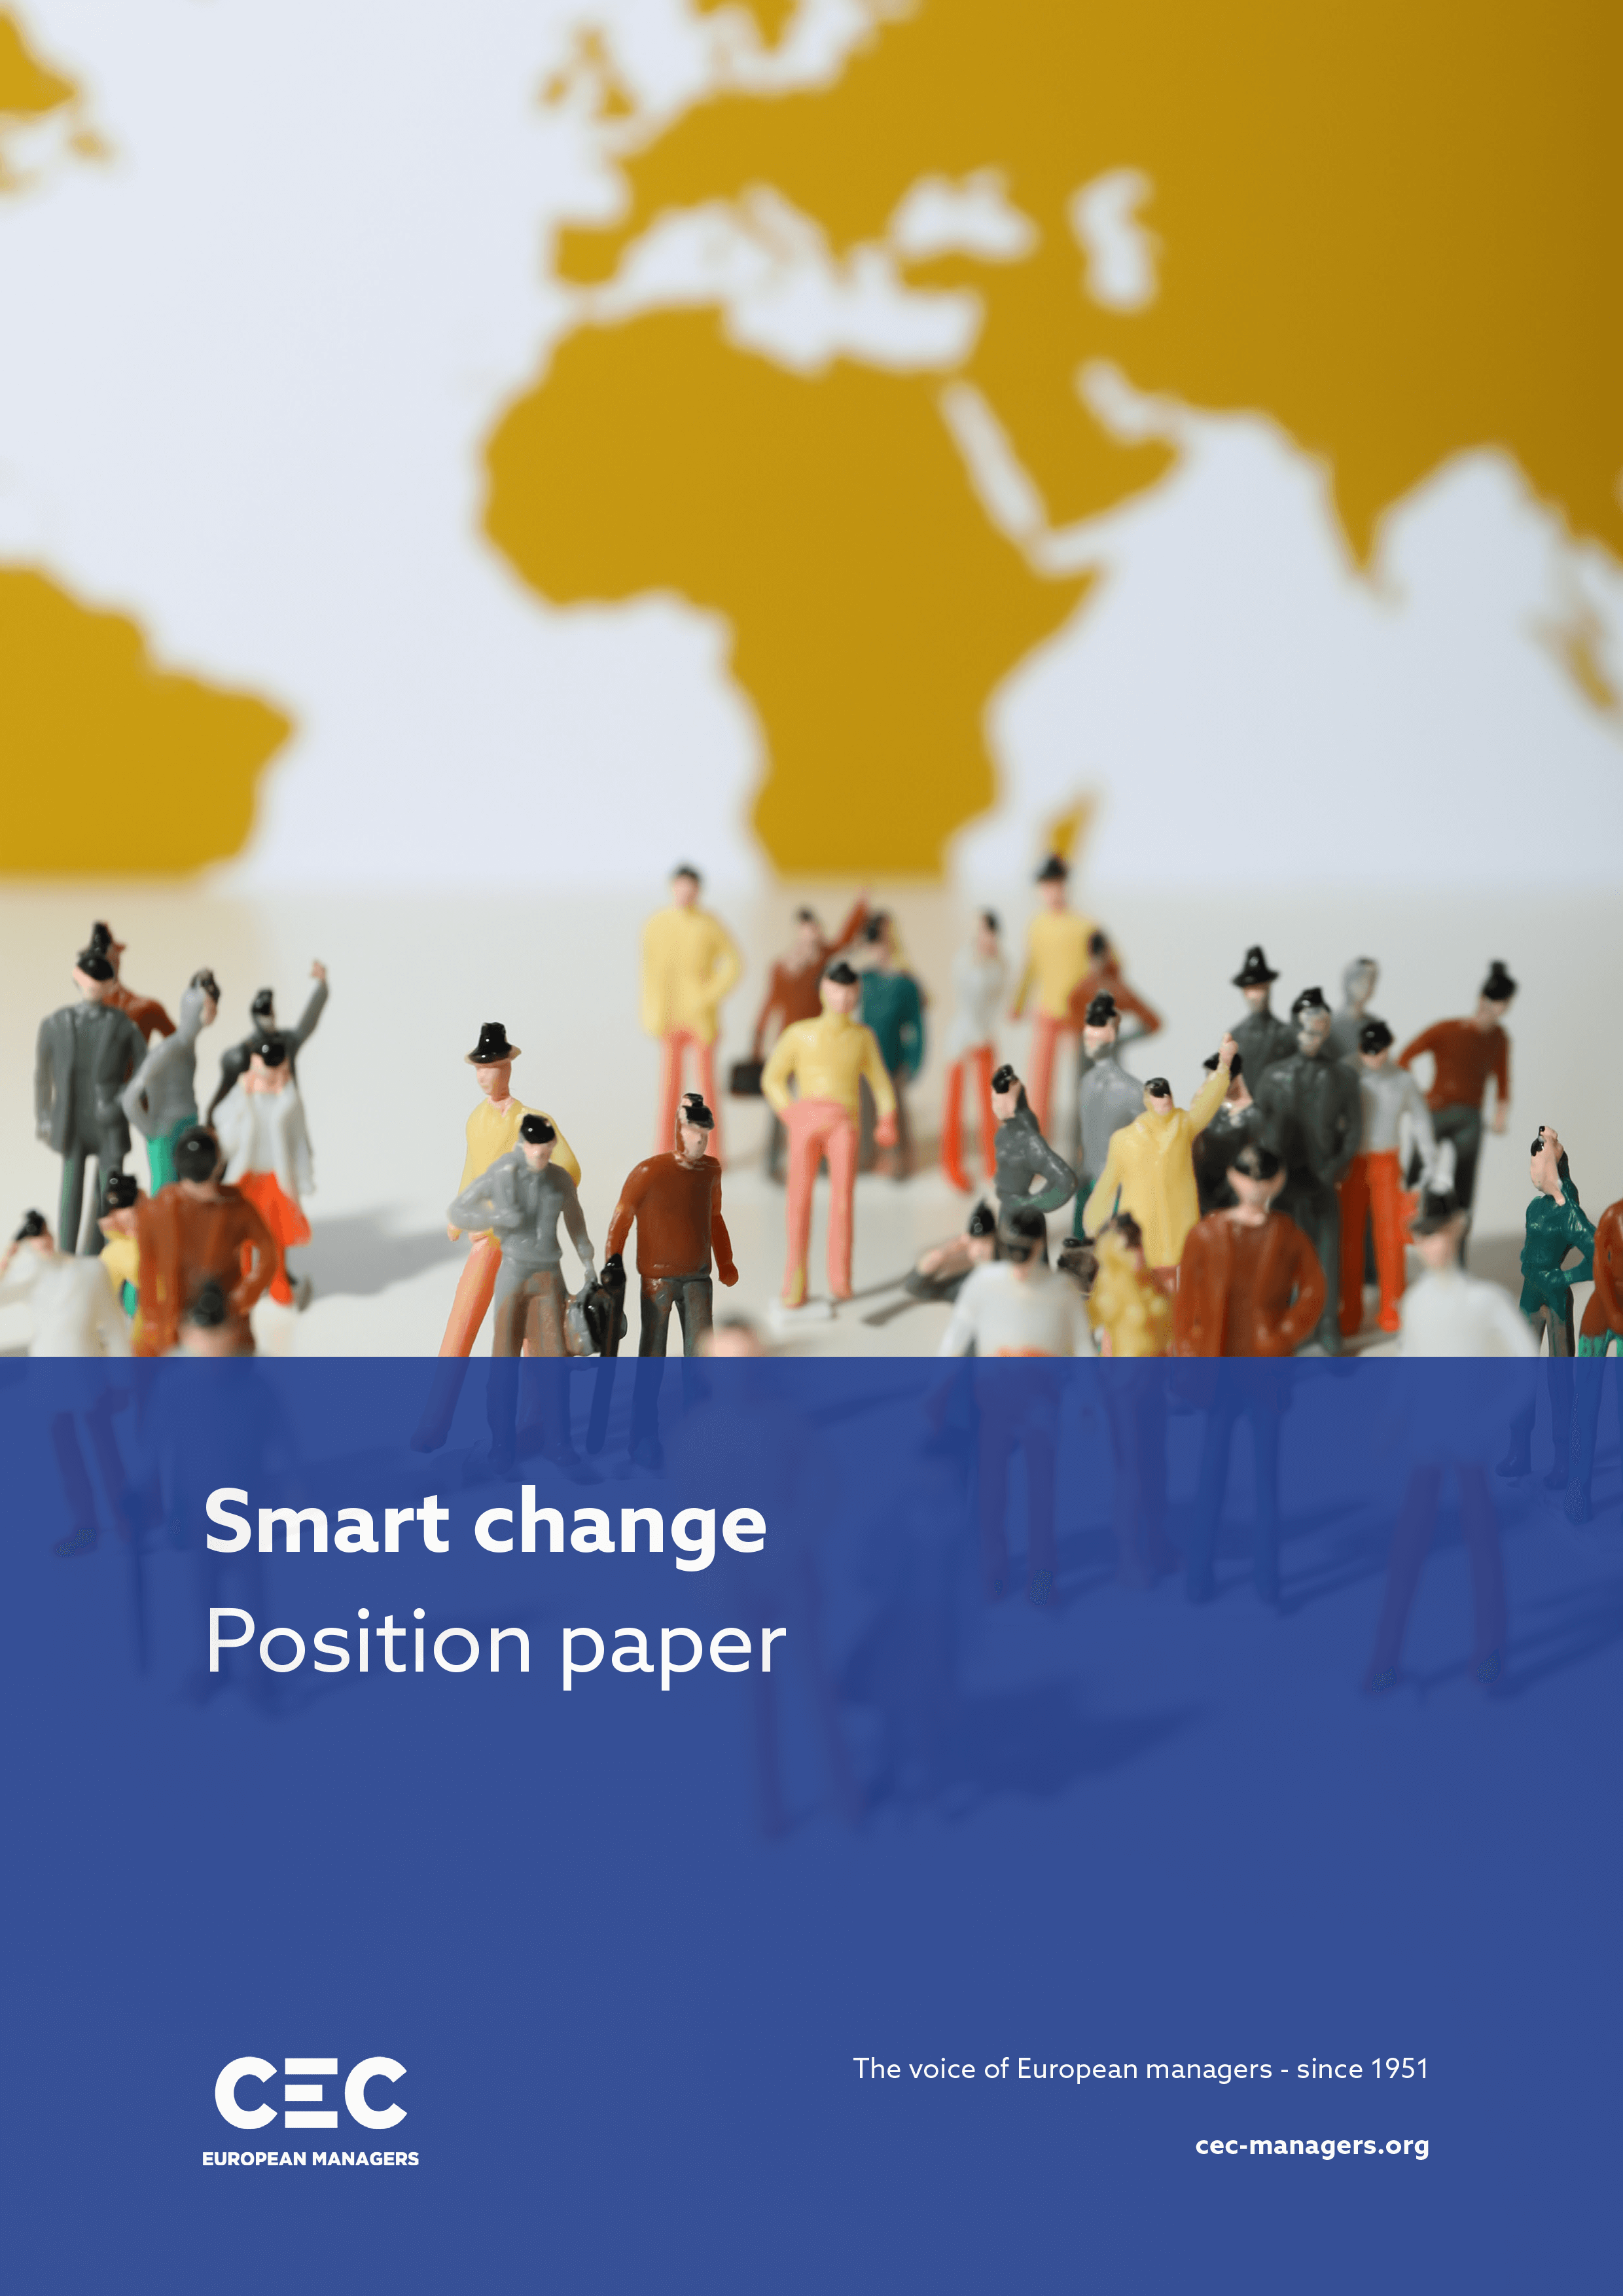 CEC European Managers - Position Paper on "Smart Change" 